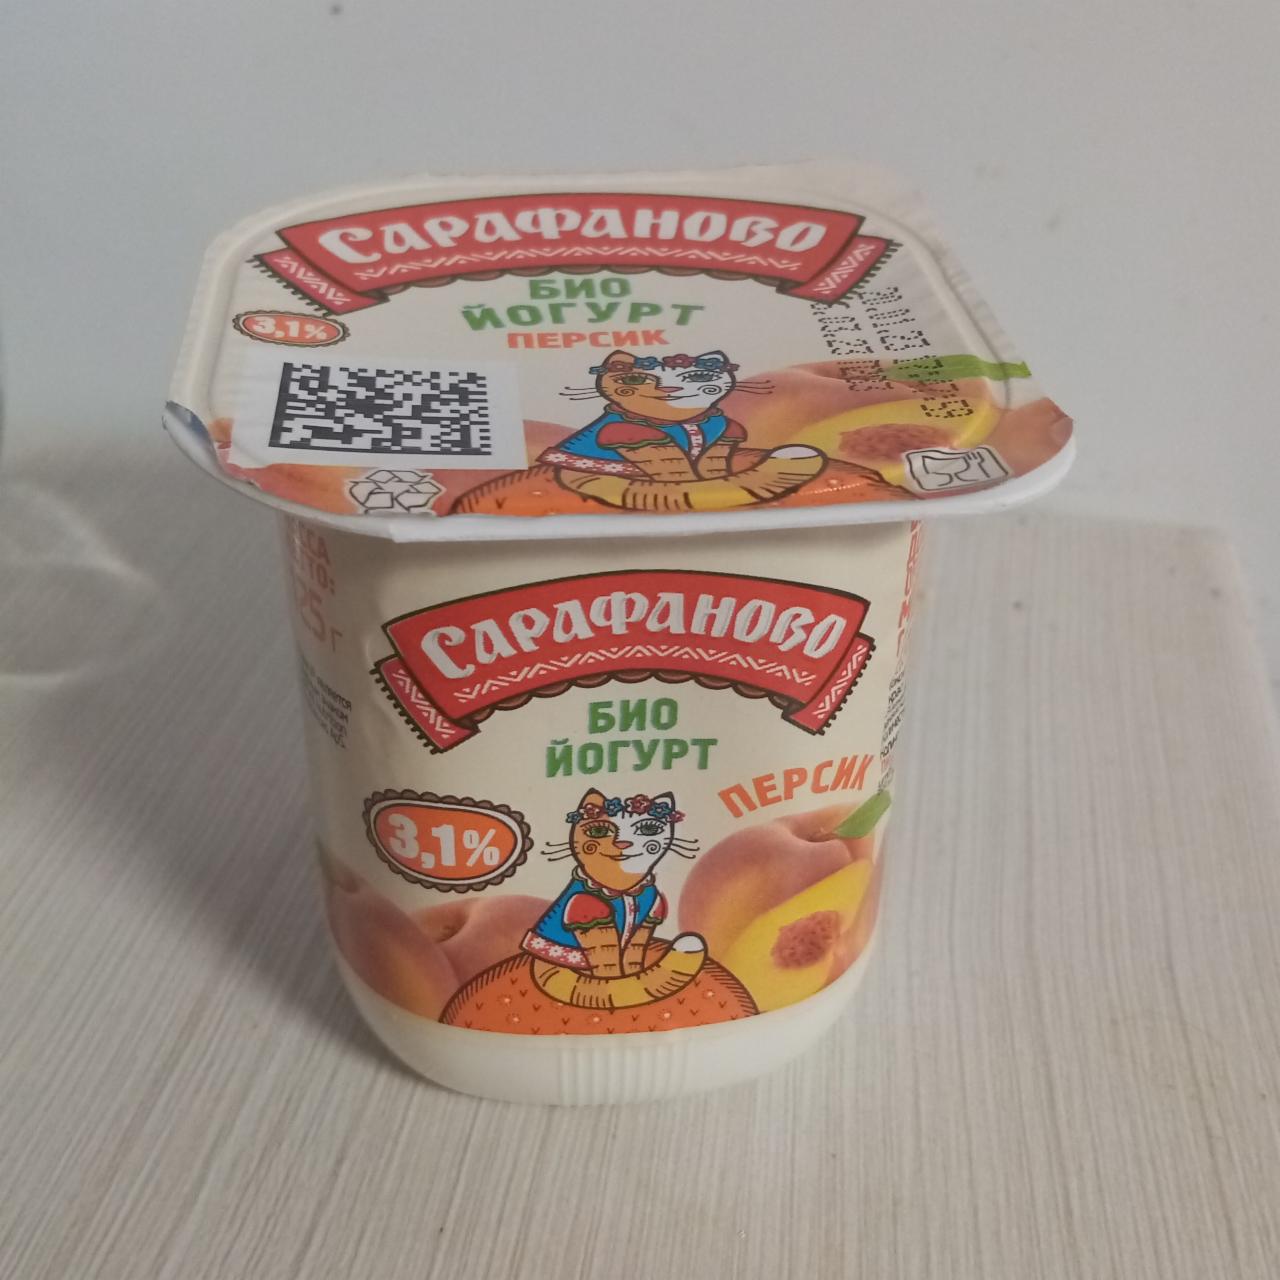 Фото - Биойогурт 3.1% Персик Сарафоново